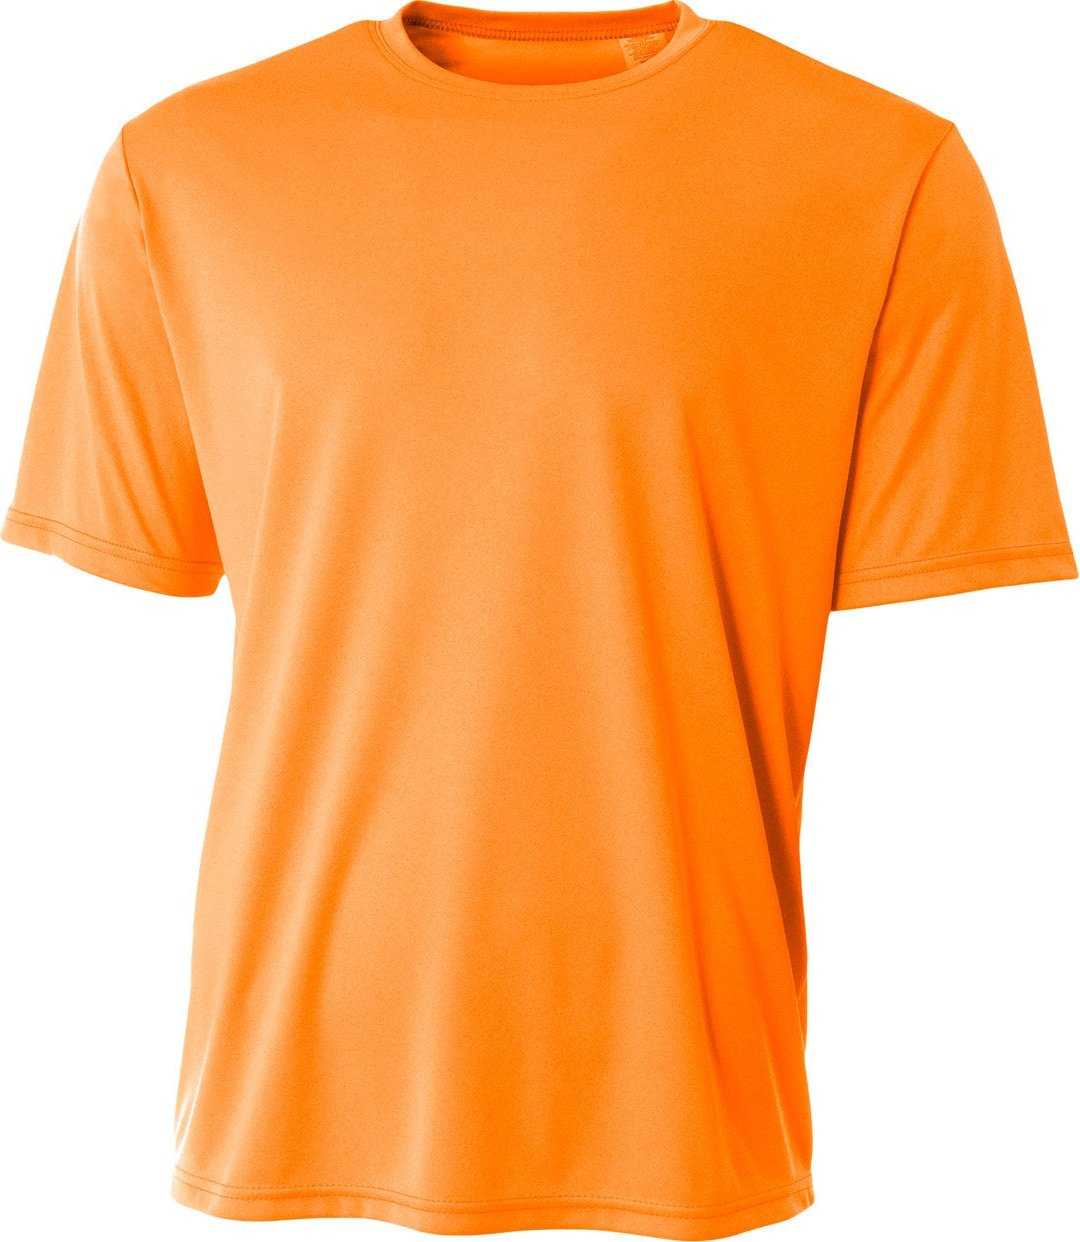 A4 NB3402 Sprint Short Sleeve Youth Tee - Safety Orange